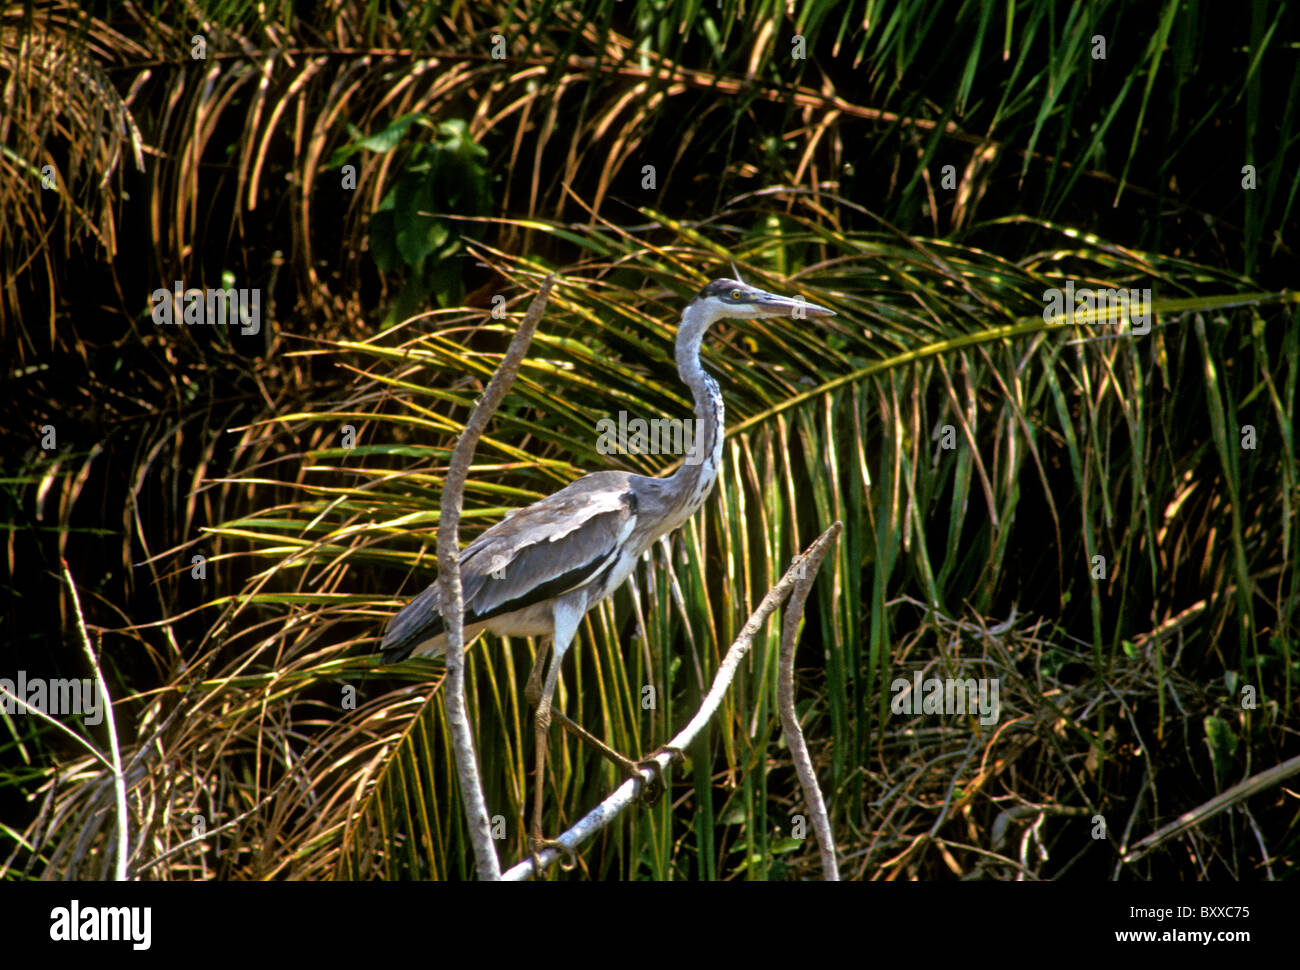 Heron, Caimano rifugio ecologico, Pantanal, Mato Grosso do Sul, Brasile, Sud America Foto Stock